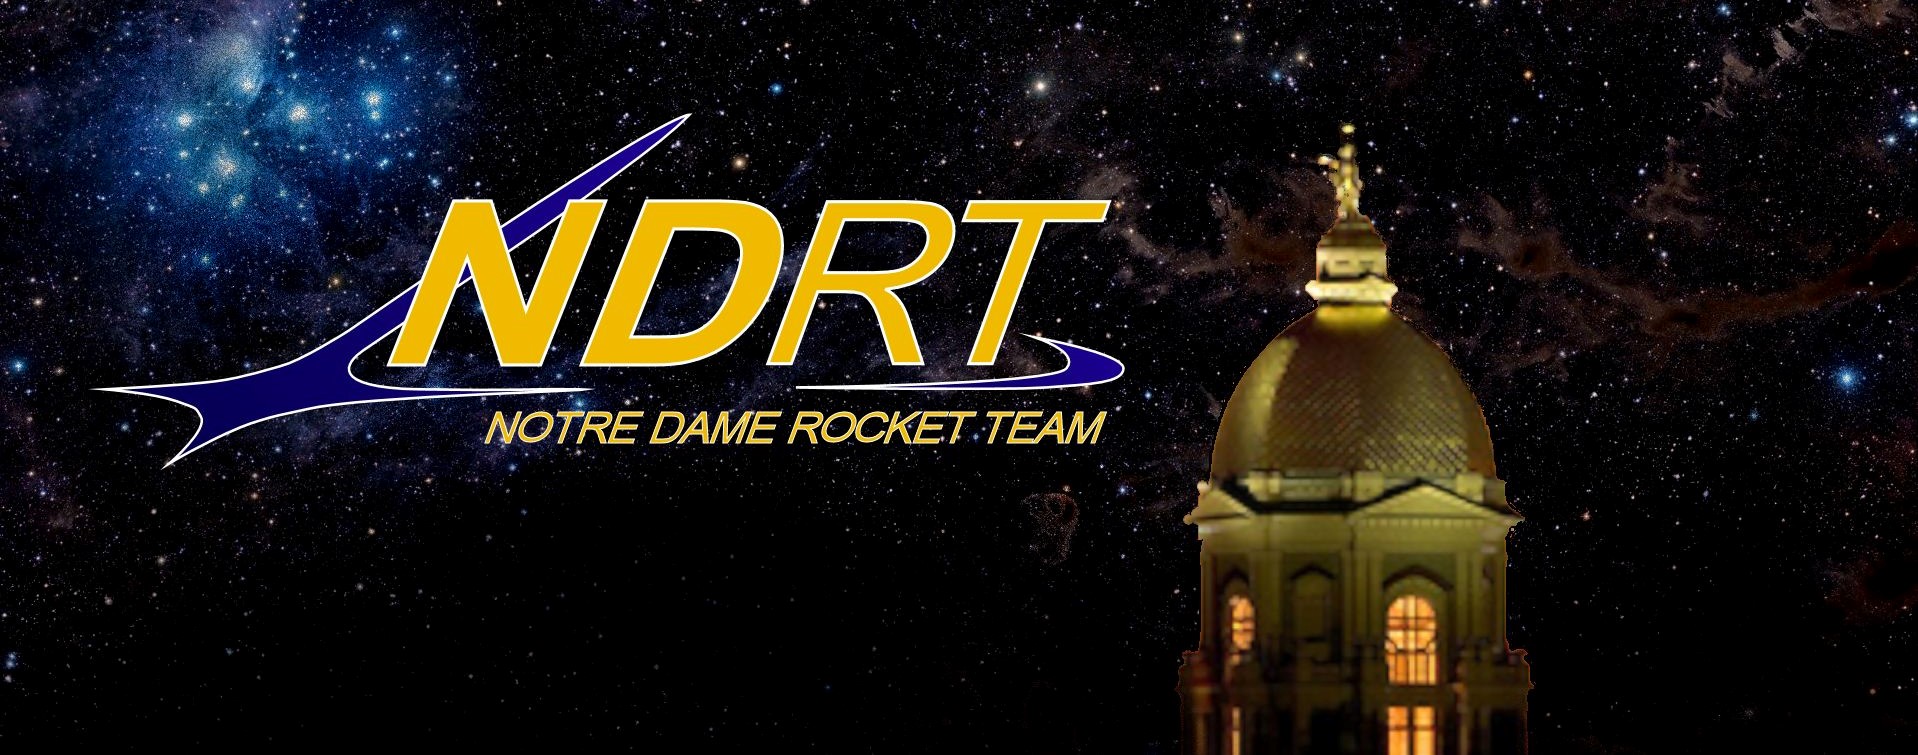 Notre Dame Rocketry Team